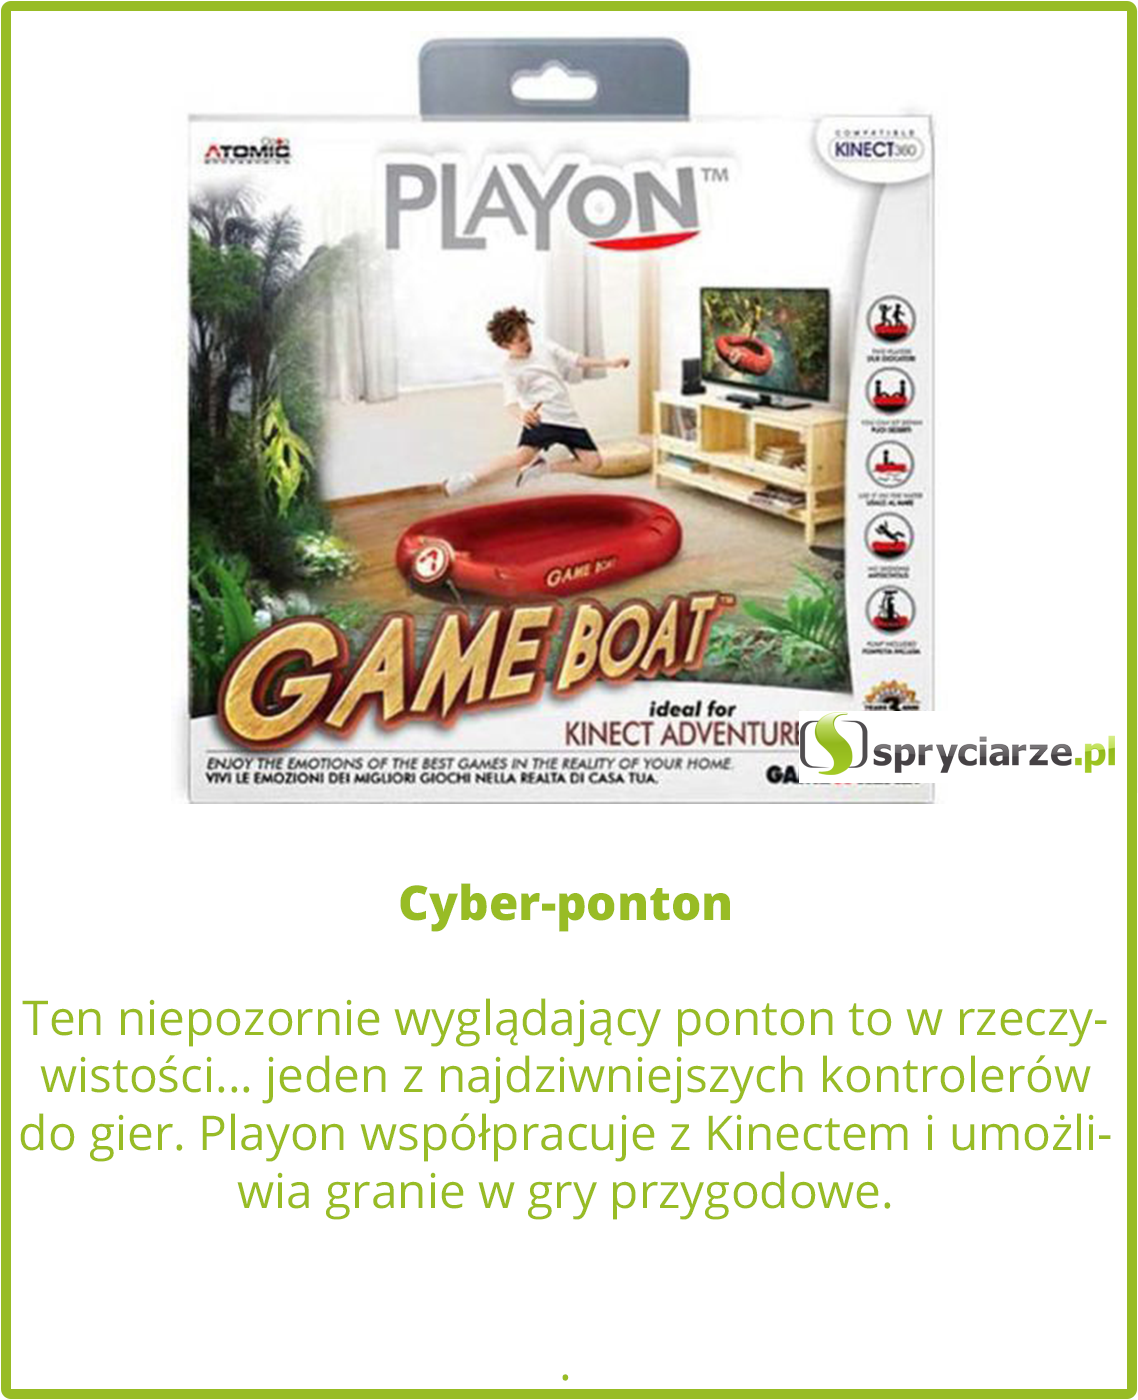 Cyber-ponton